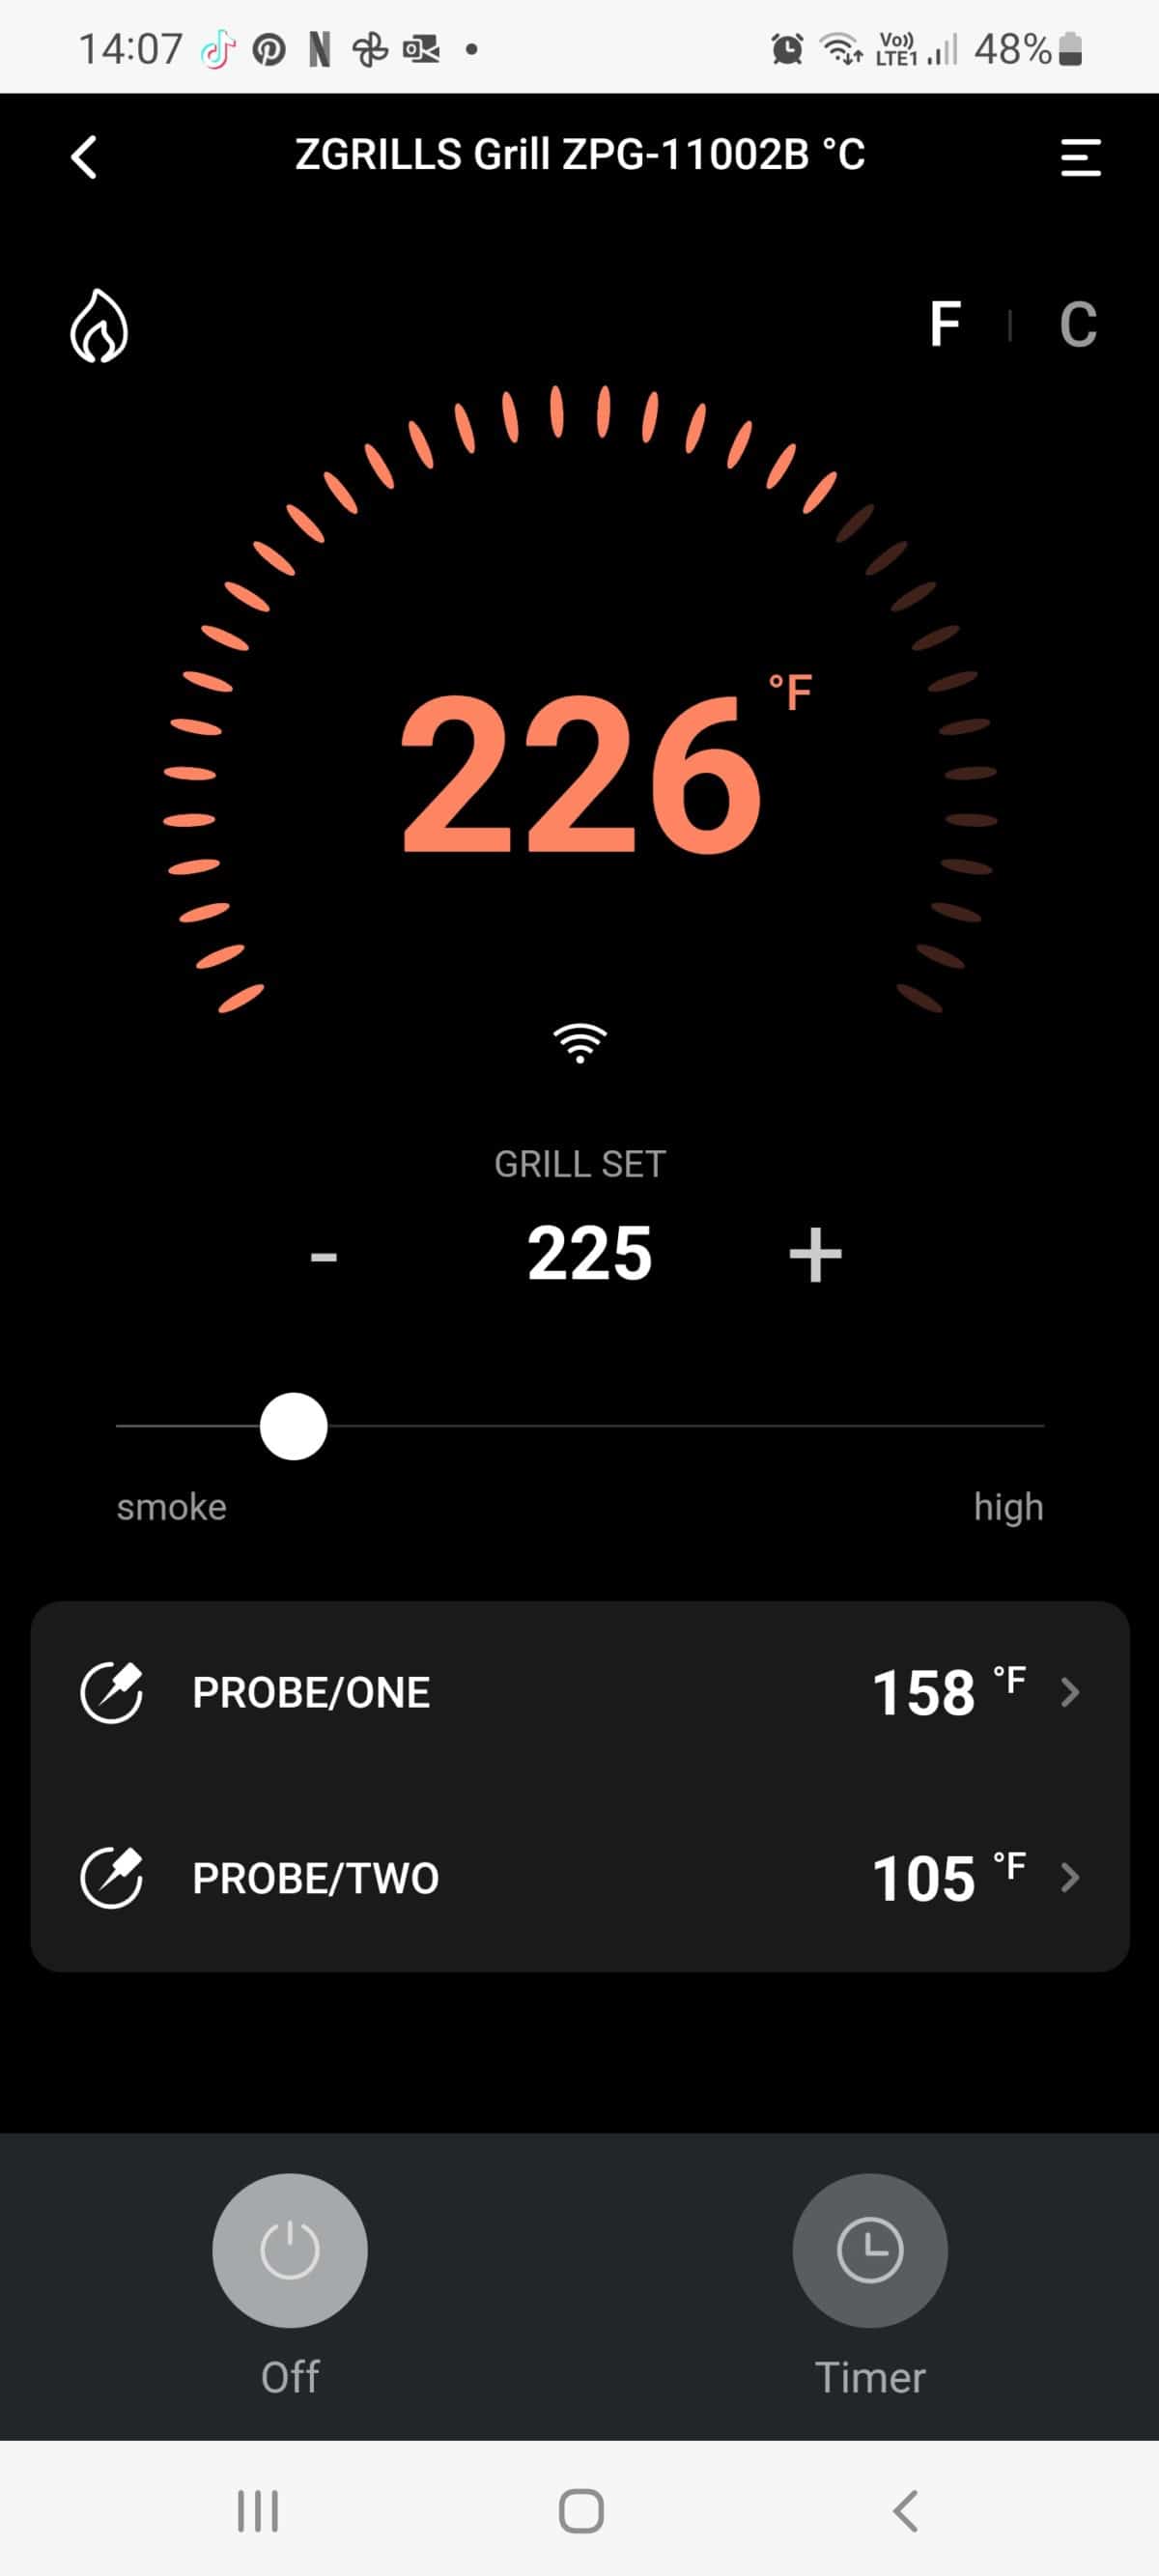 z grills smartphone app screenshot showing the grills various temperatures